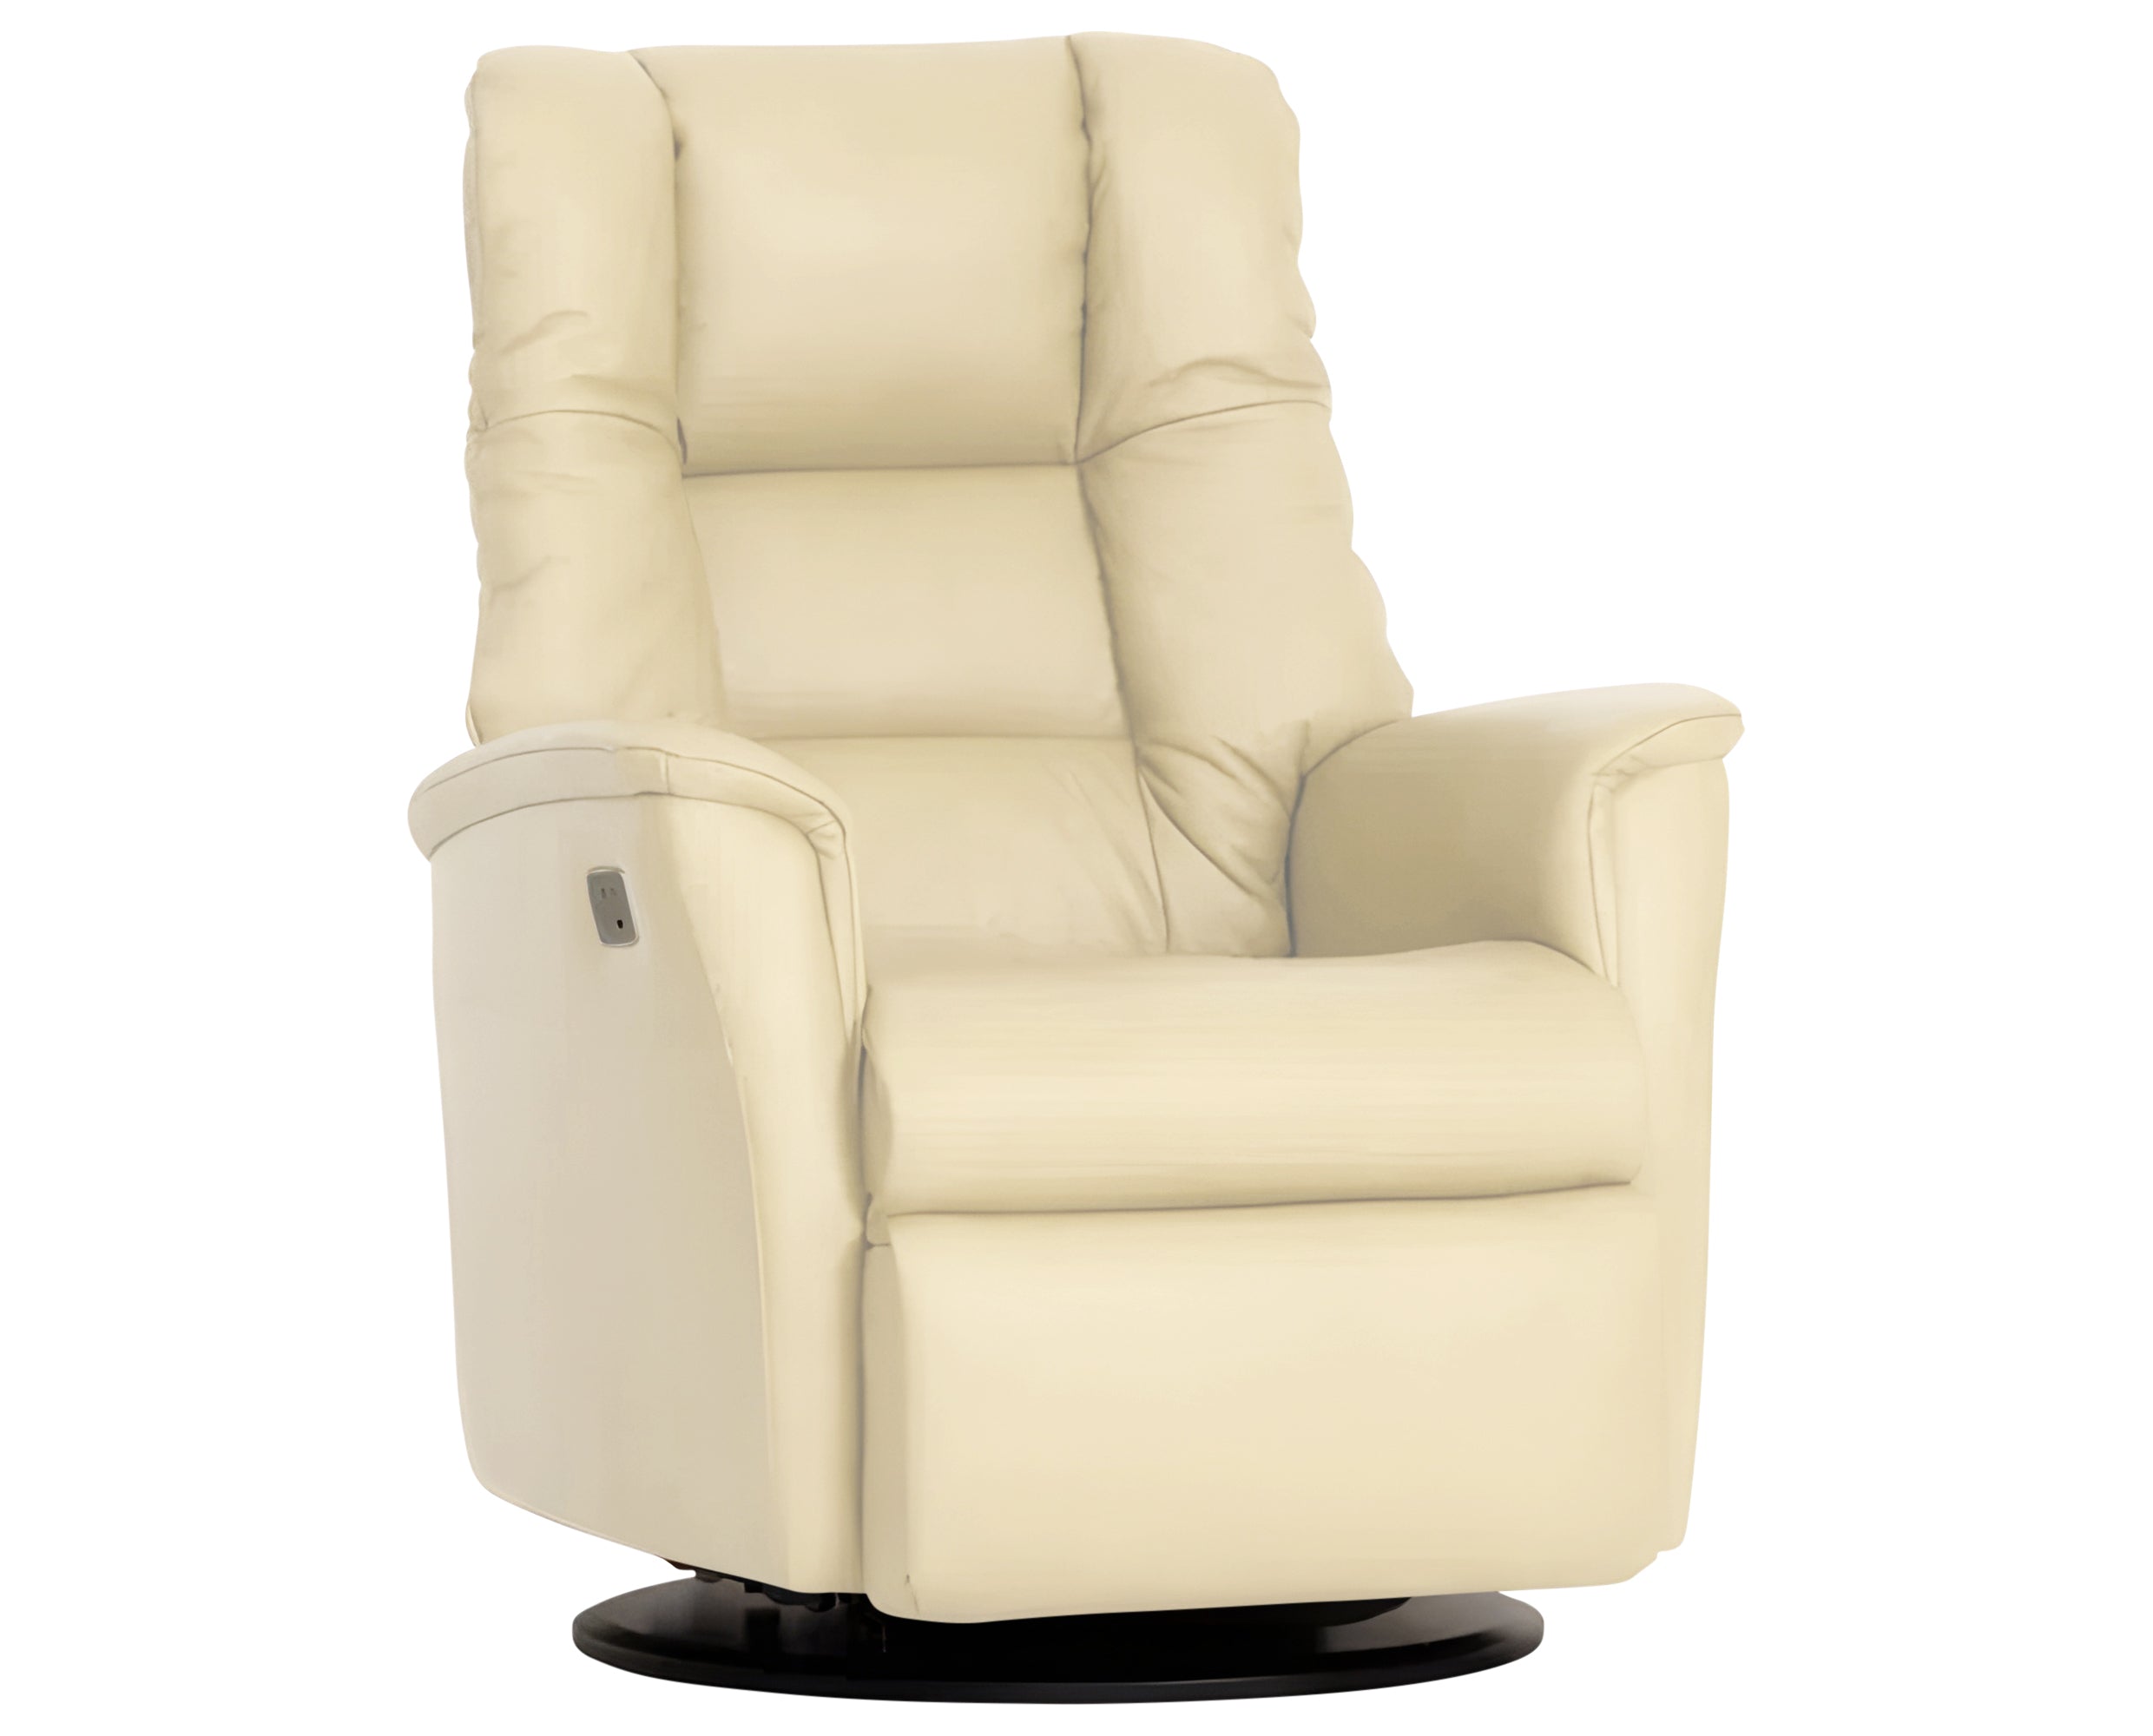 Trend Leather Cream L | Norwegian Comfort Victor Recliner - Promo | Valley Ridge Furniture